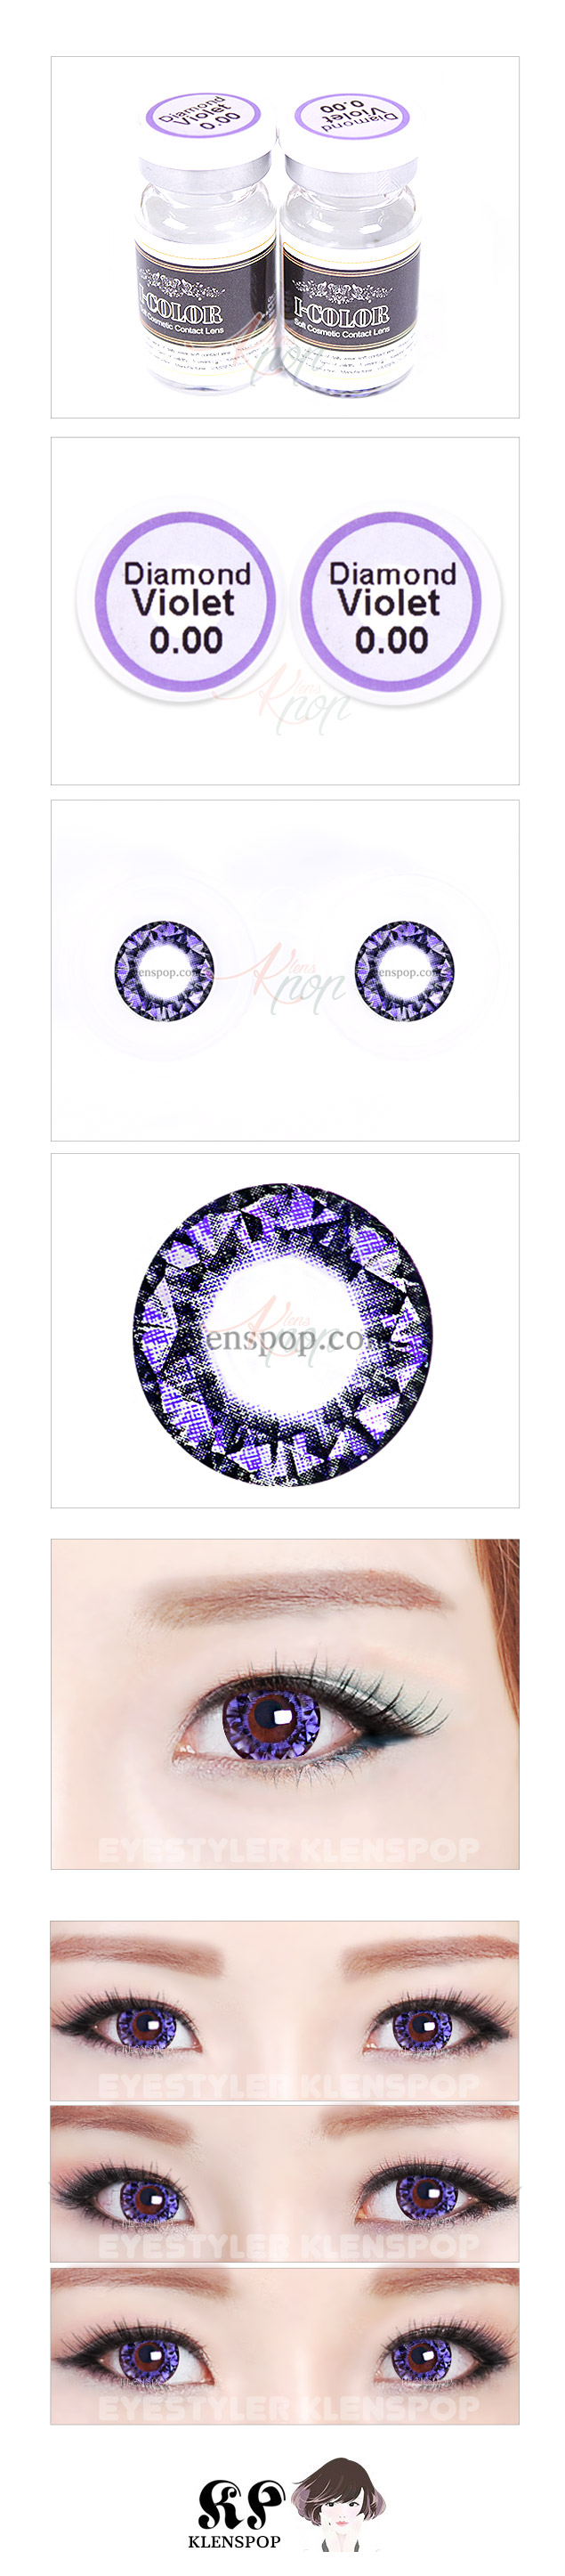 Description image of Diamond Violet Prescription Colored Contacts